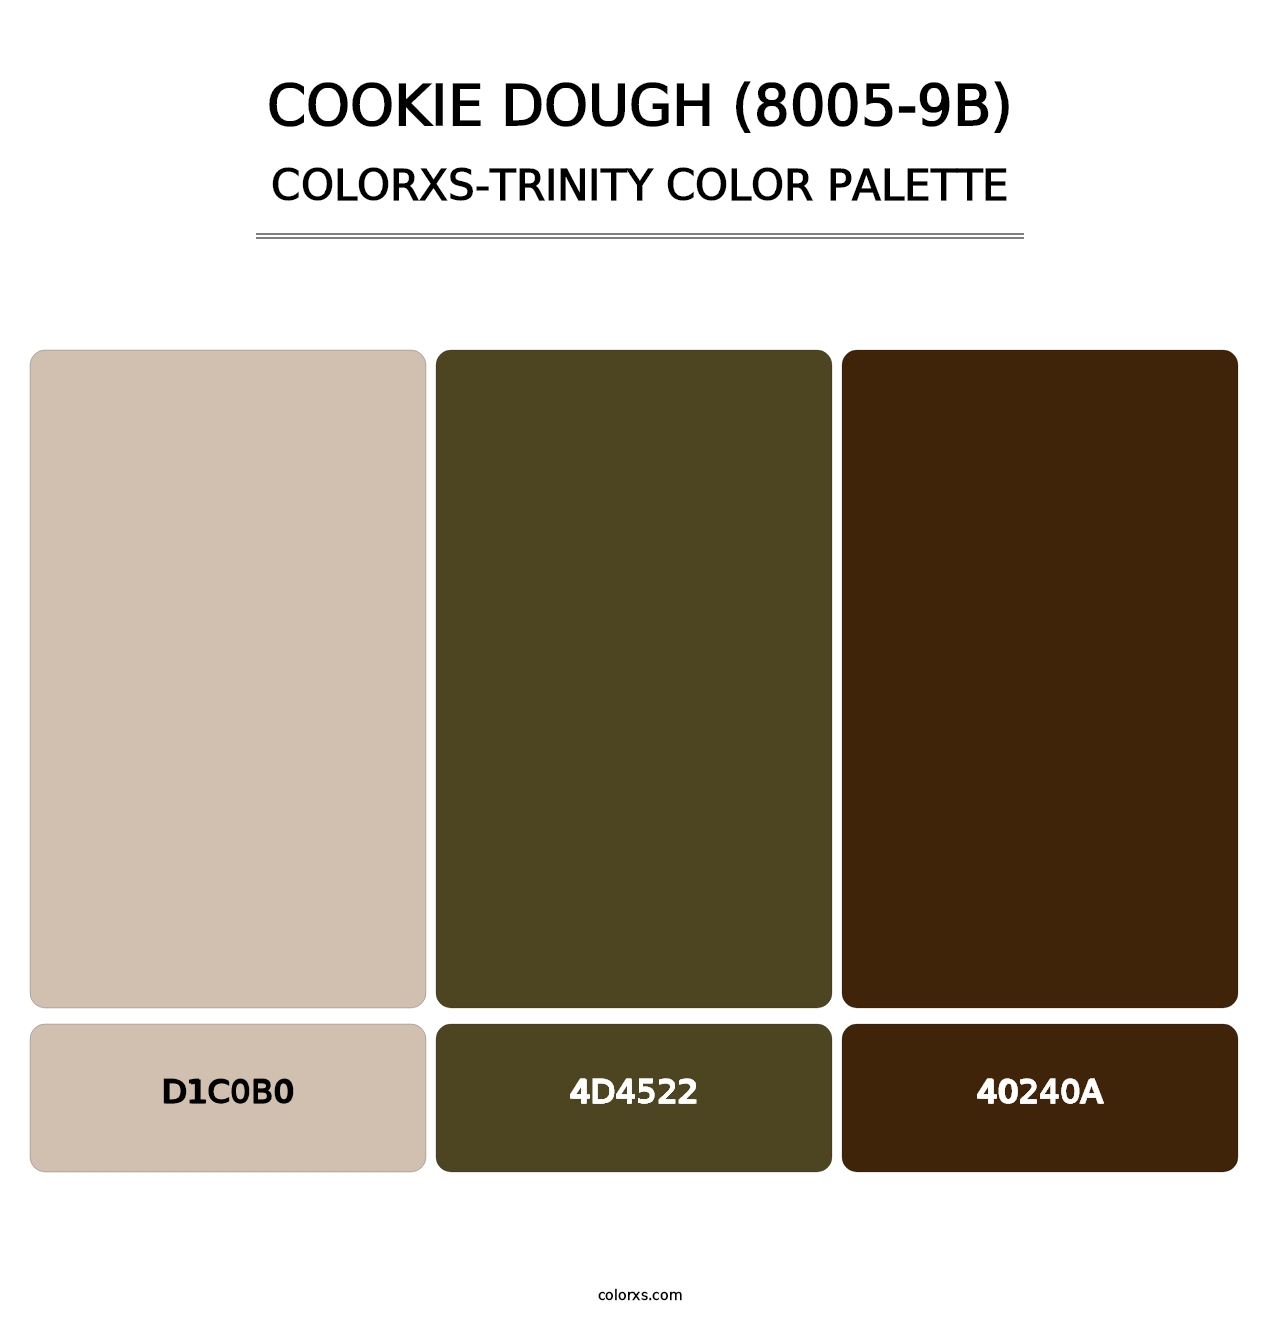 Cookie Dough (8005-9B) - Colorxs Trinity Palette